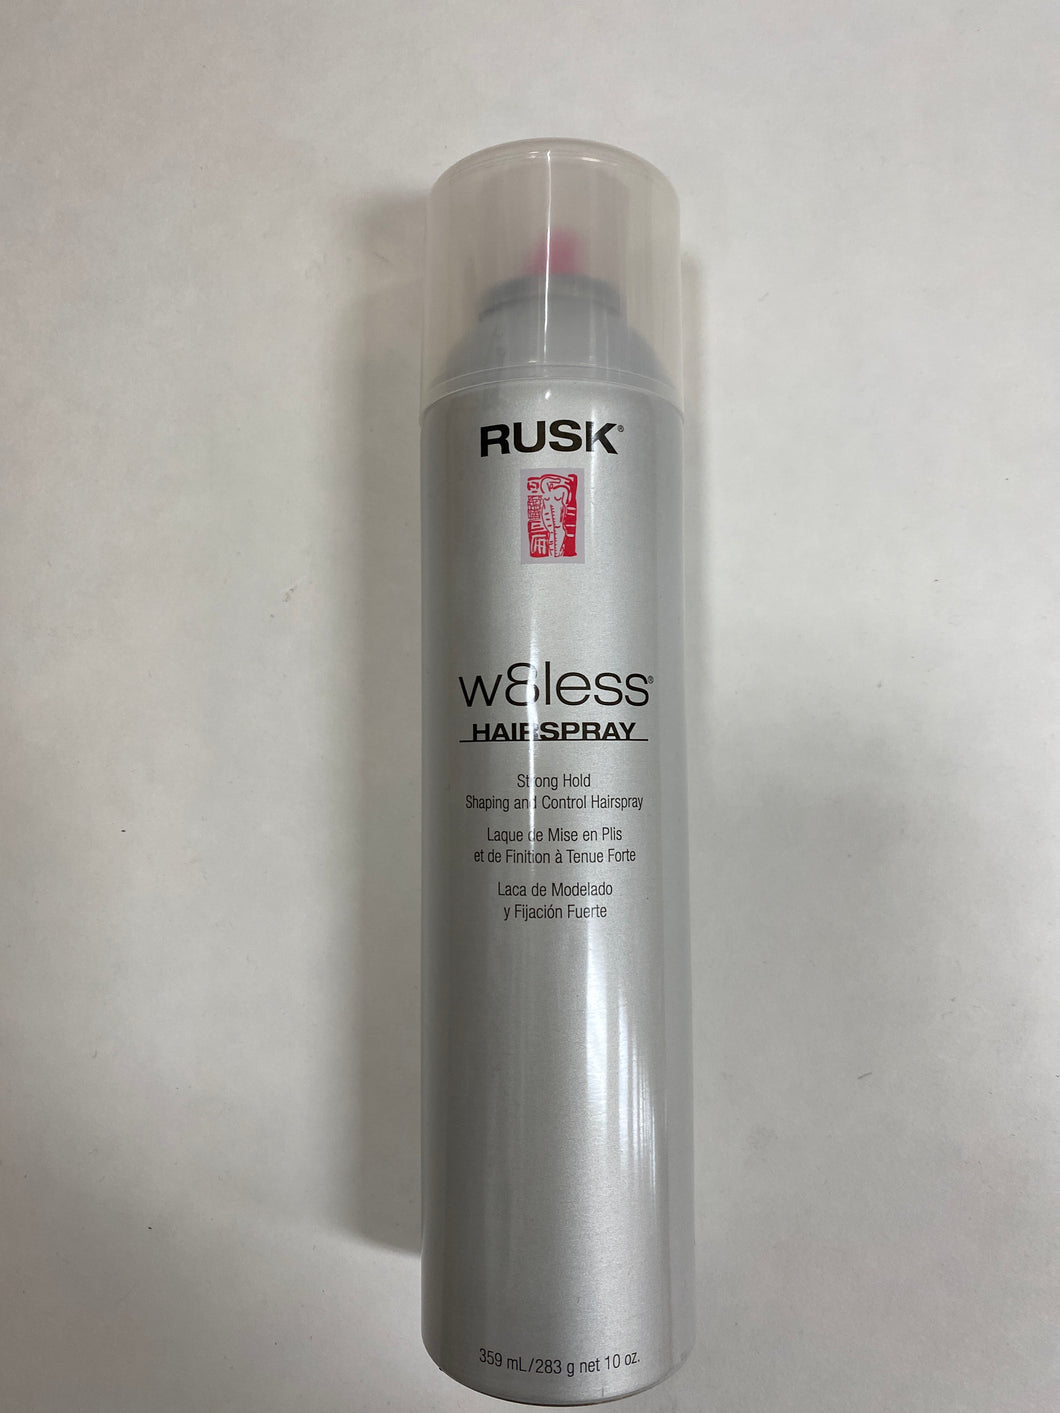 Rusk w8less Hairspray